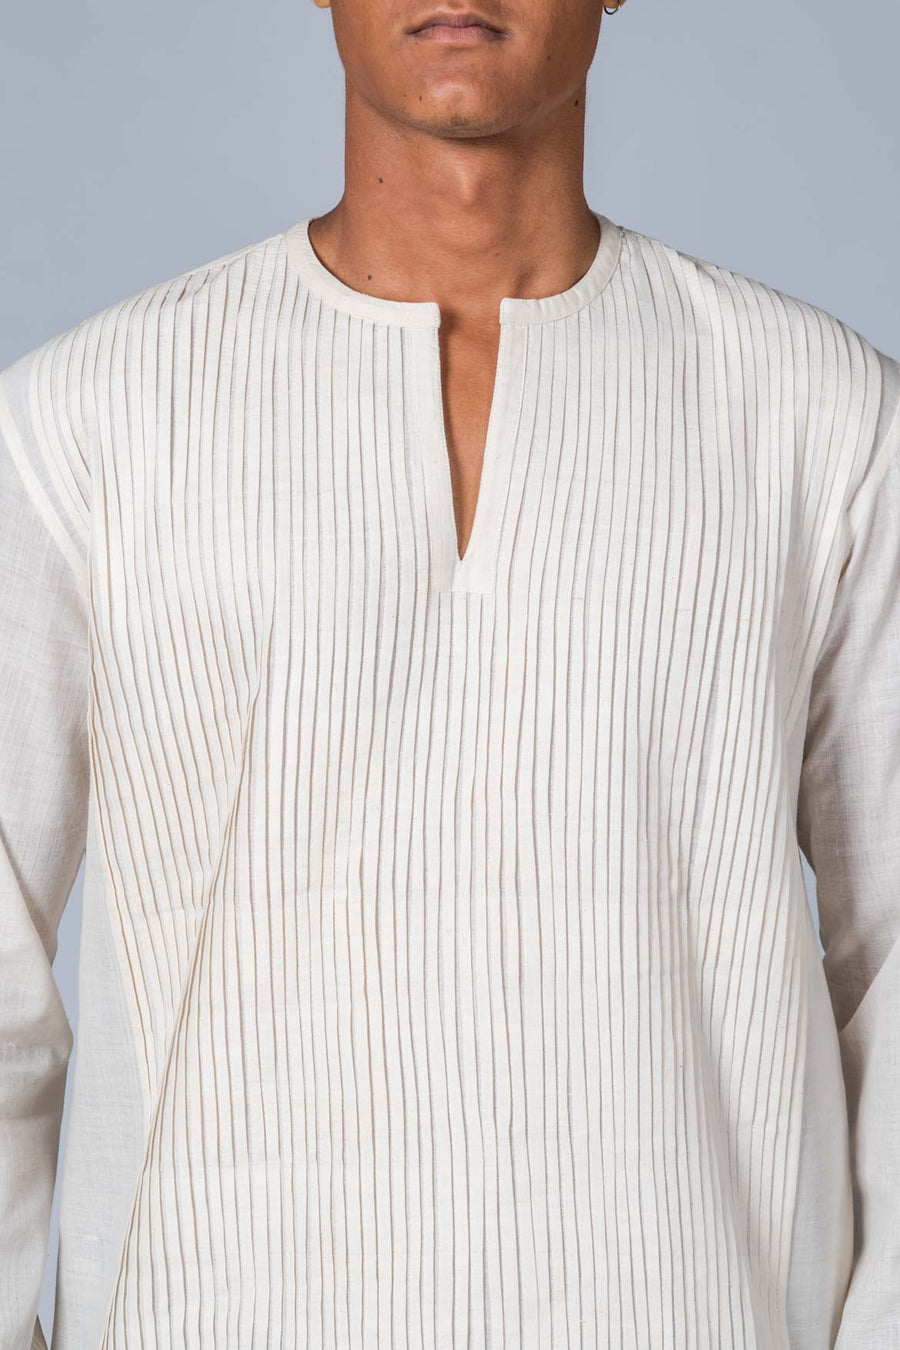 Off-White Mangalgiri Cotton Shirt - COTTON TREE - Upasana Design Studio